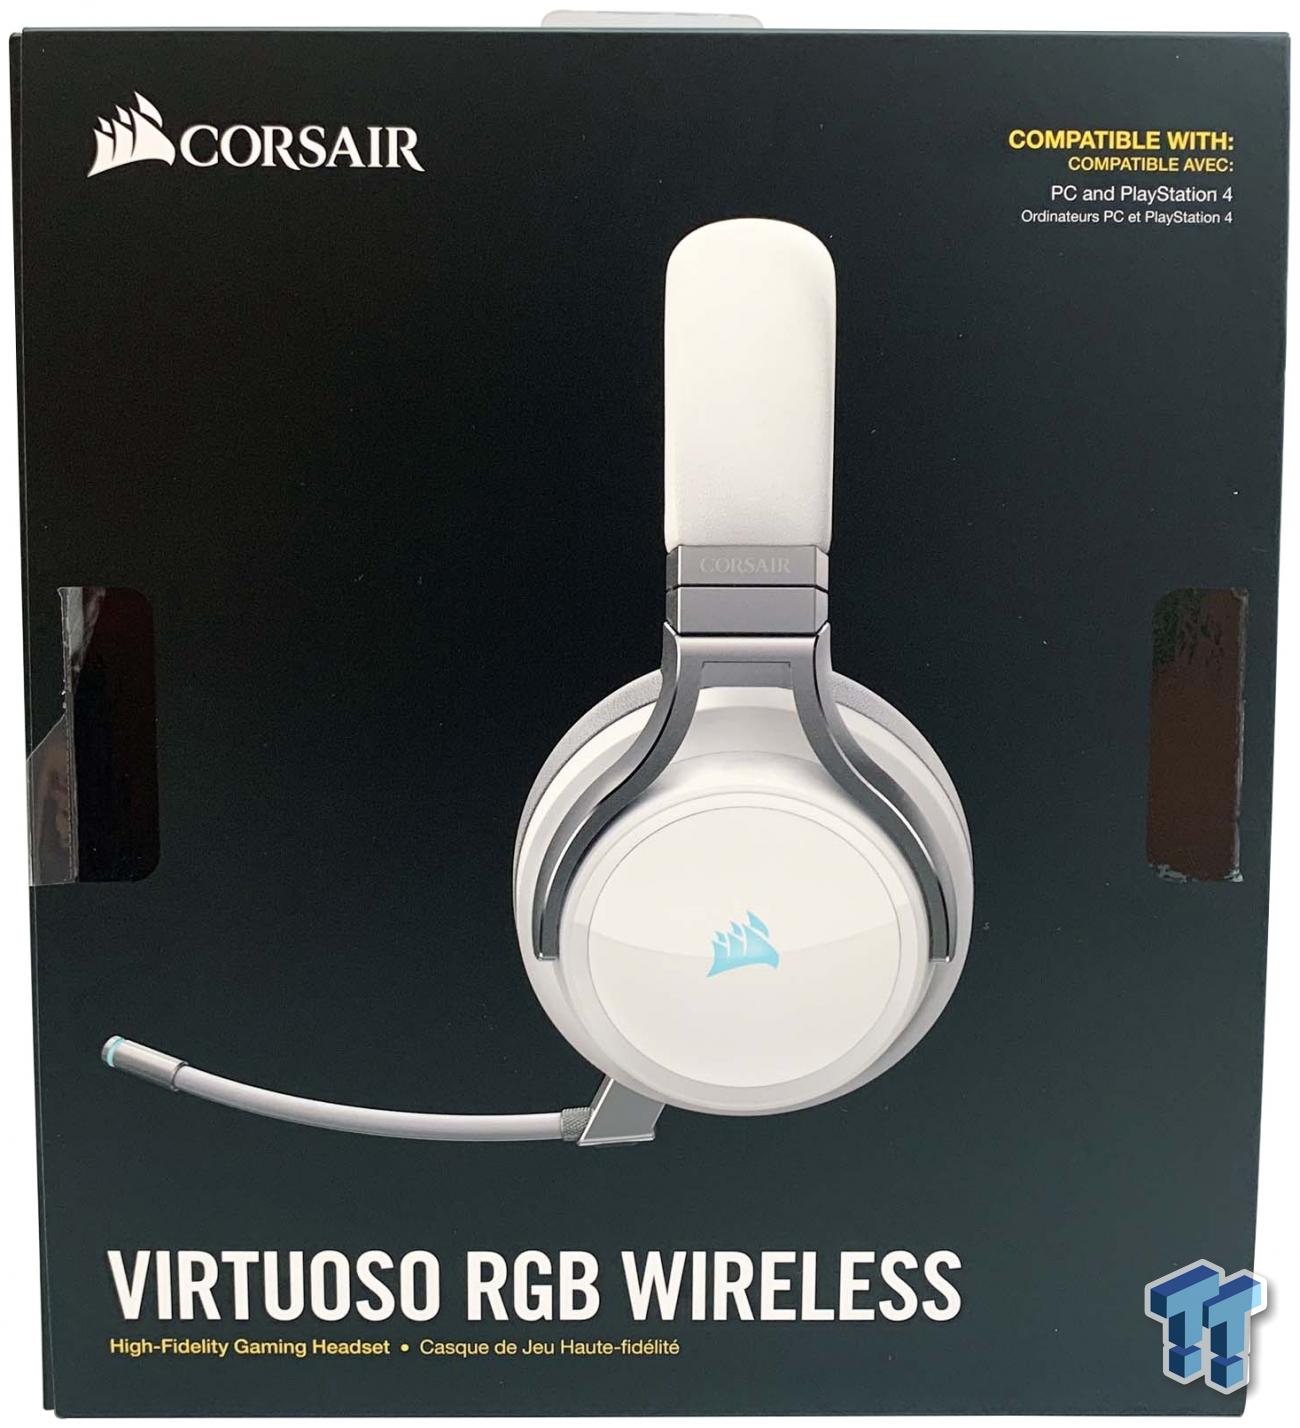 Corsair Virtuoso RGB Wireless Gaming Headset Review